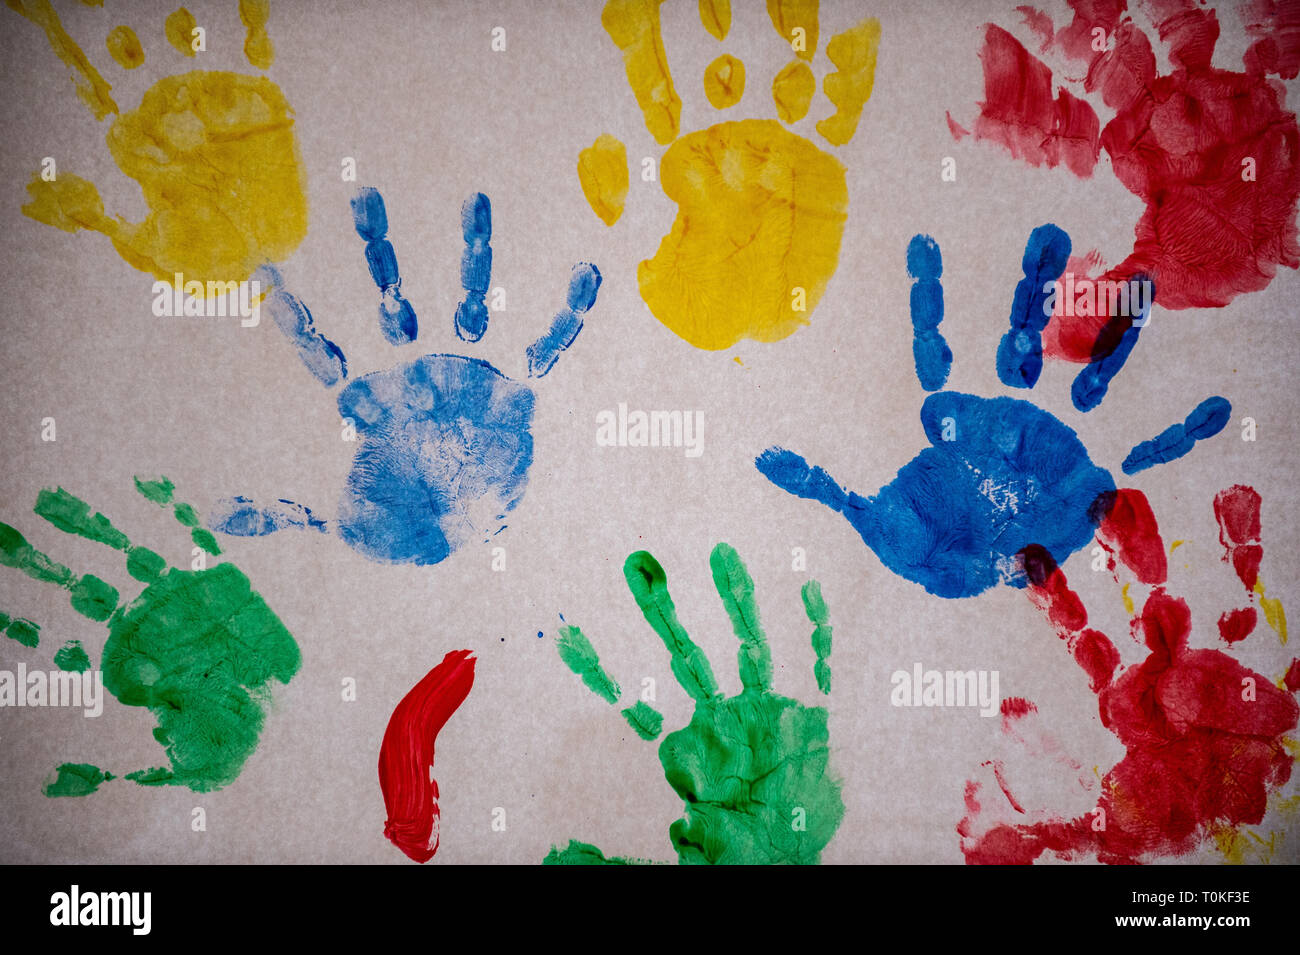 Colourful detail children's handprints in paint Stock Photo